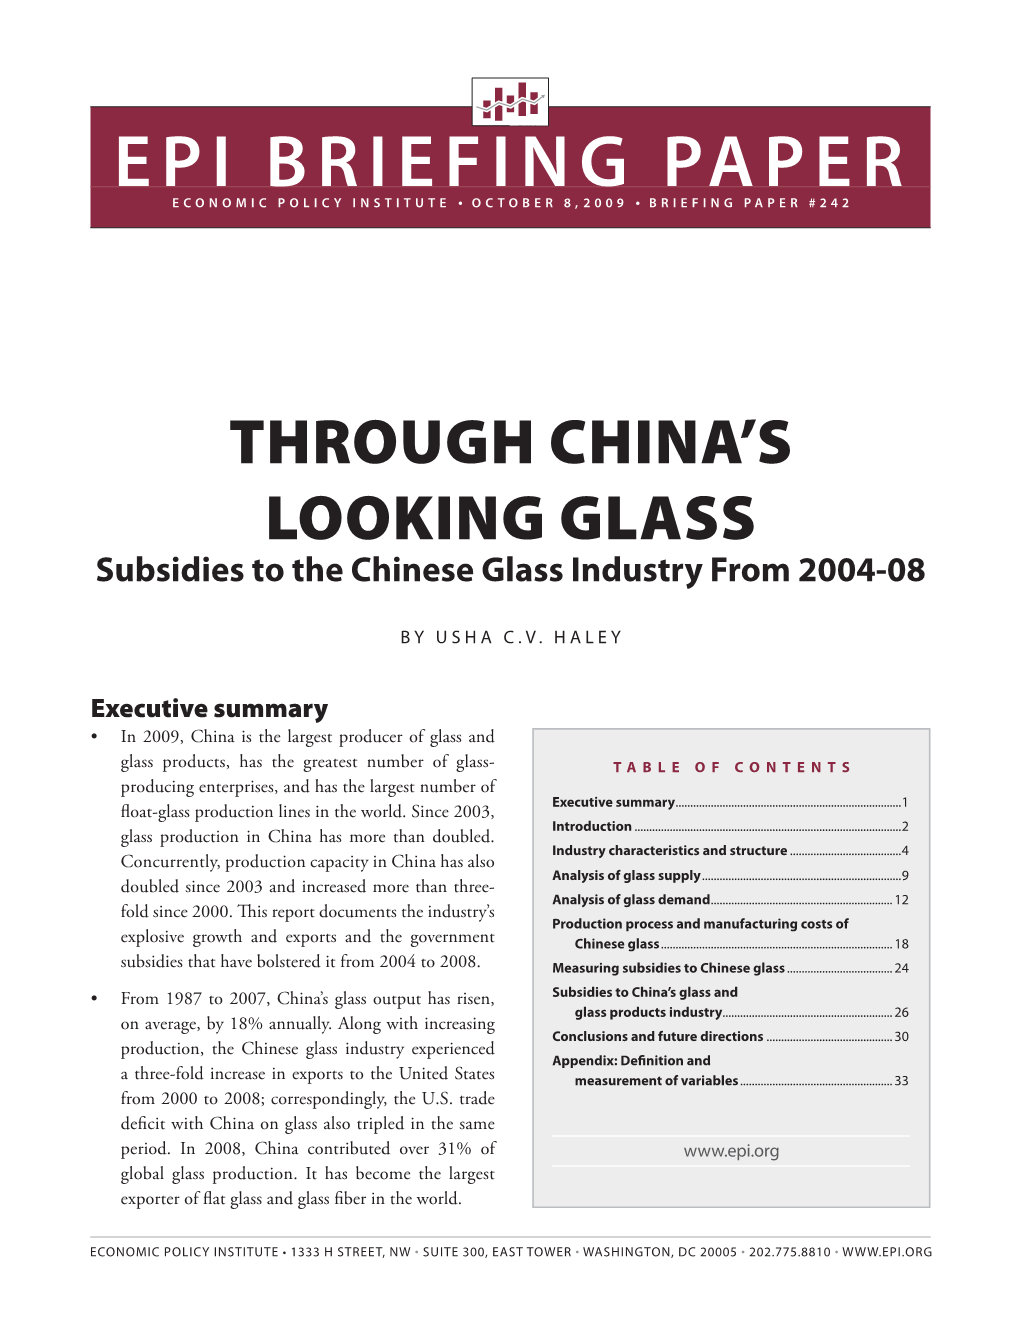 Epi Briefing Paper Economic Policy Institute ● October 8, 2009 ● Briefing Paper #242